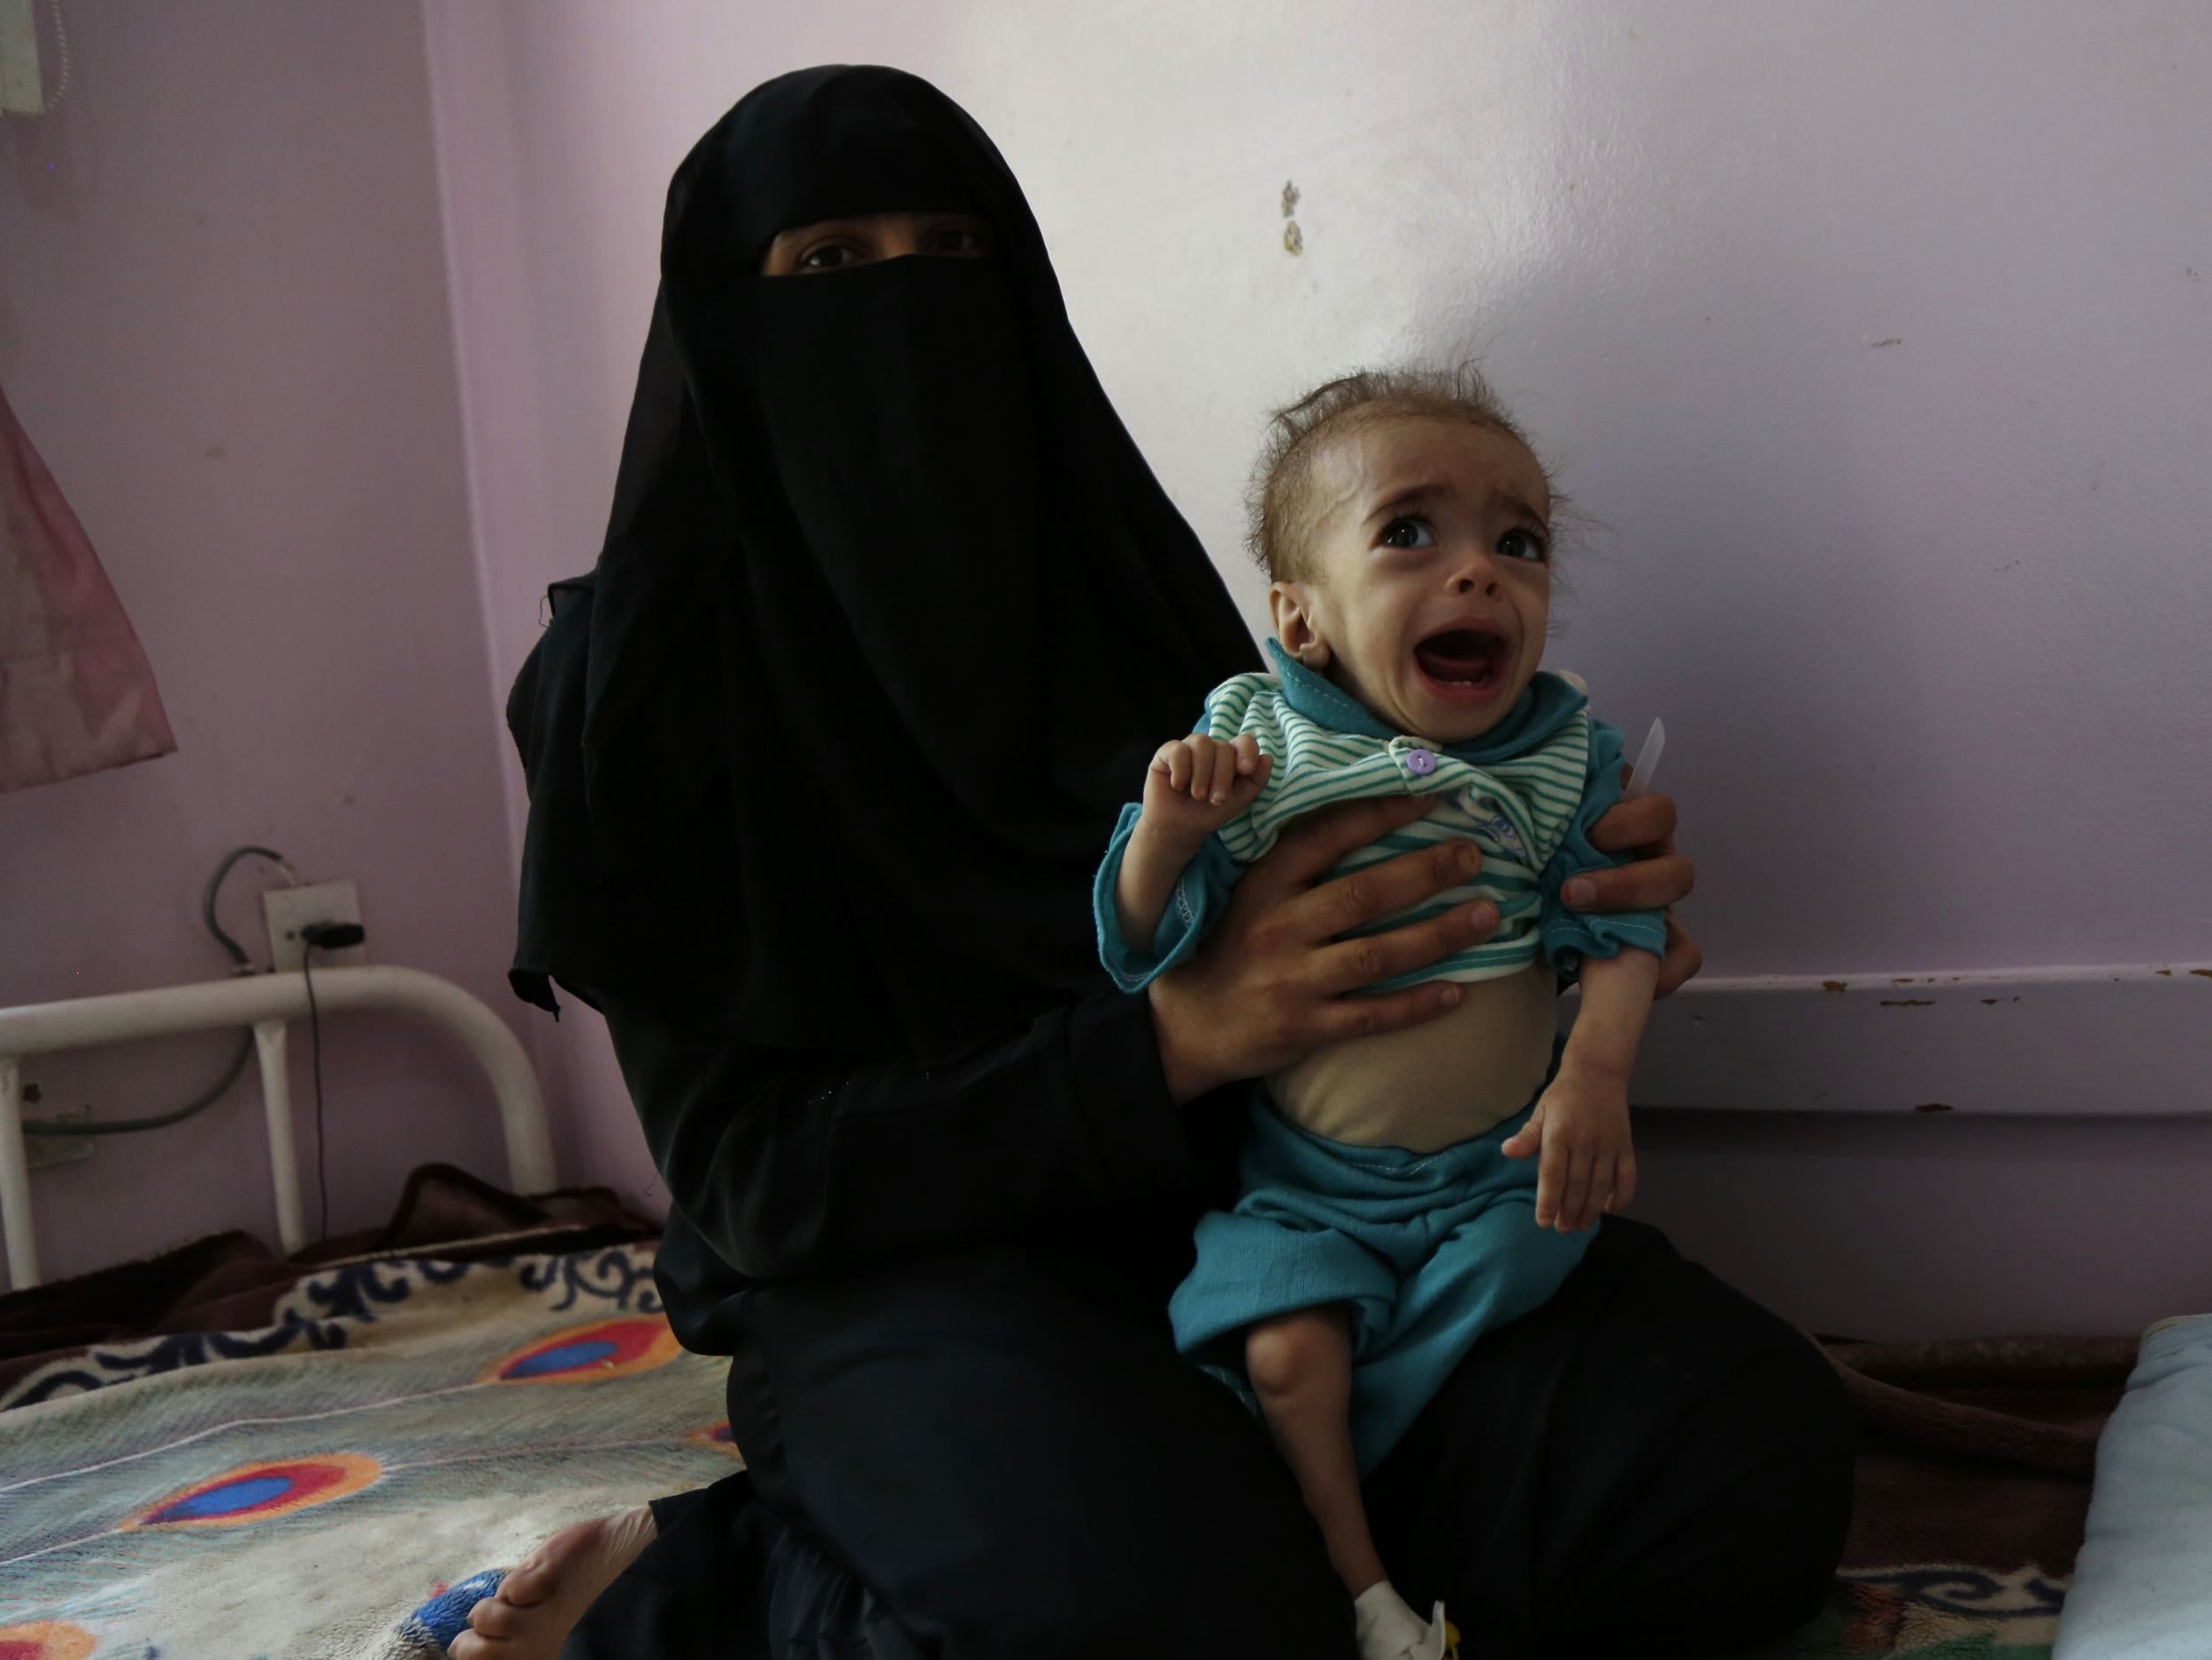 Йемен: репортеры — дети войны – афиша